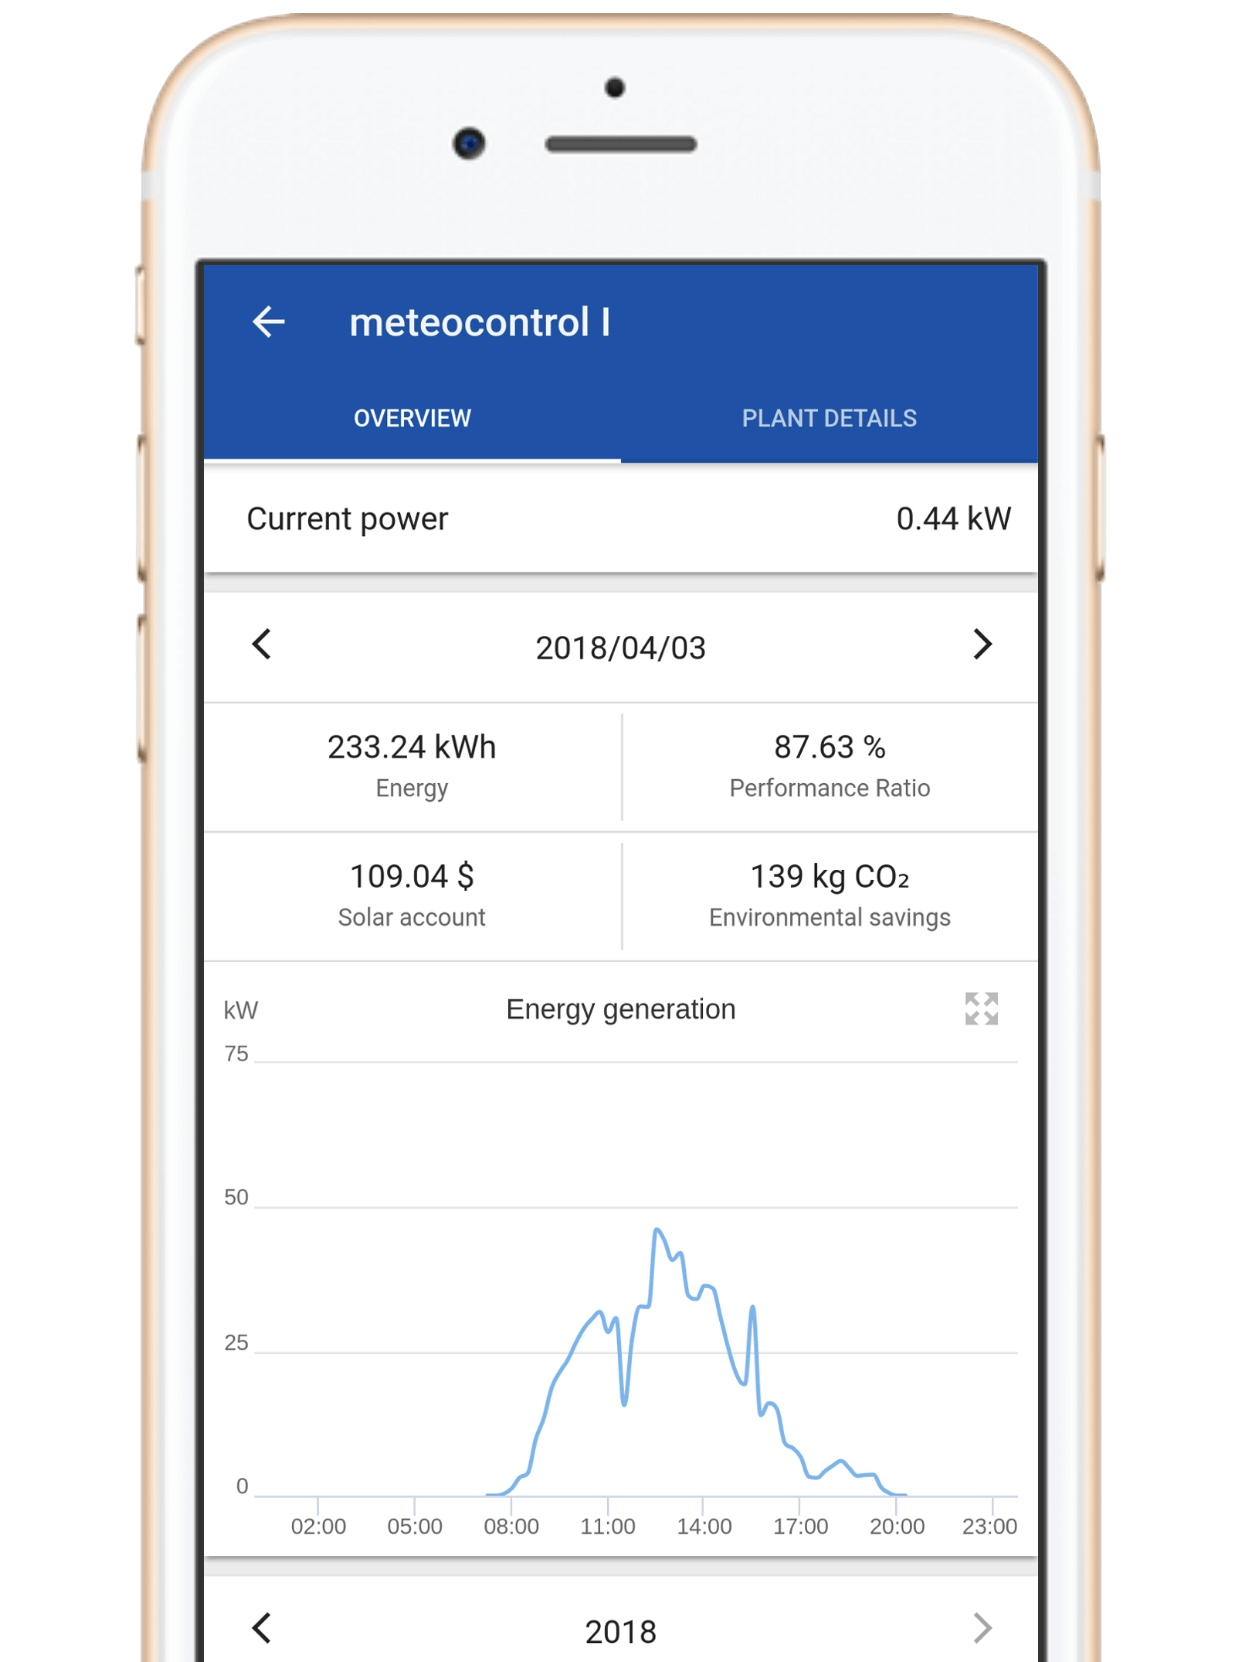 VCOM monitoring app on mobile device showing key performance indicators